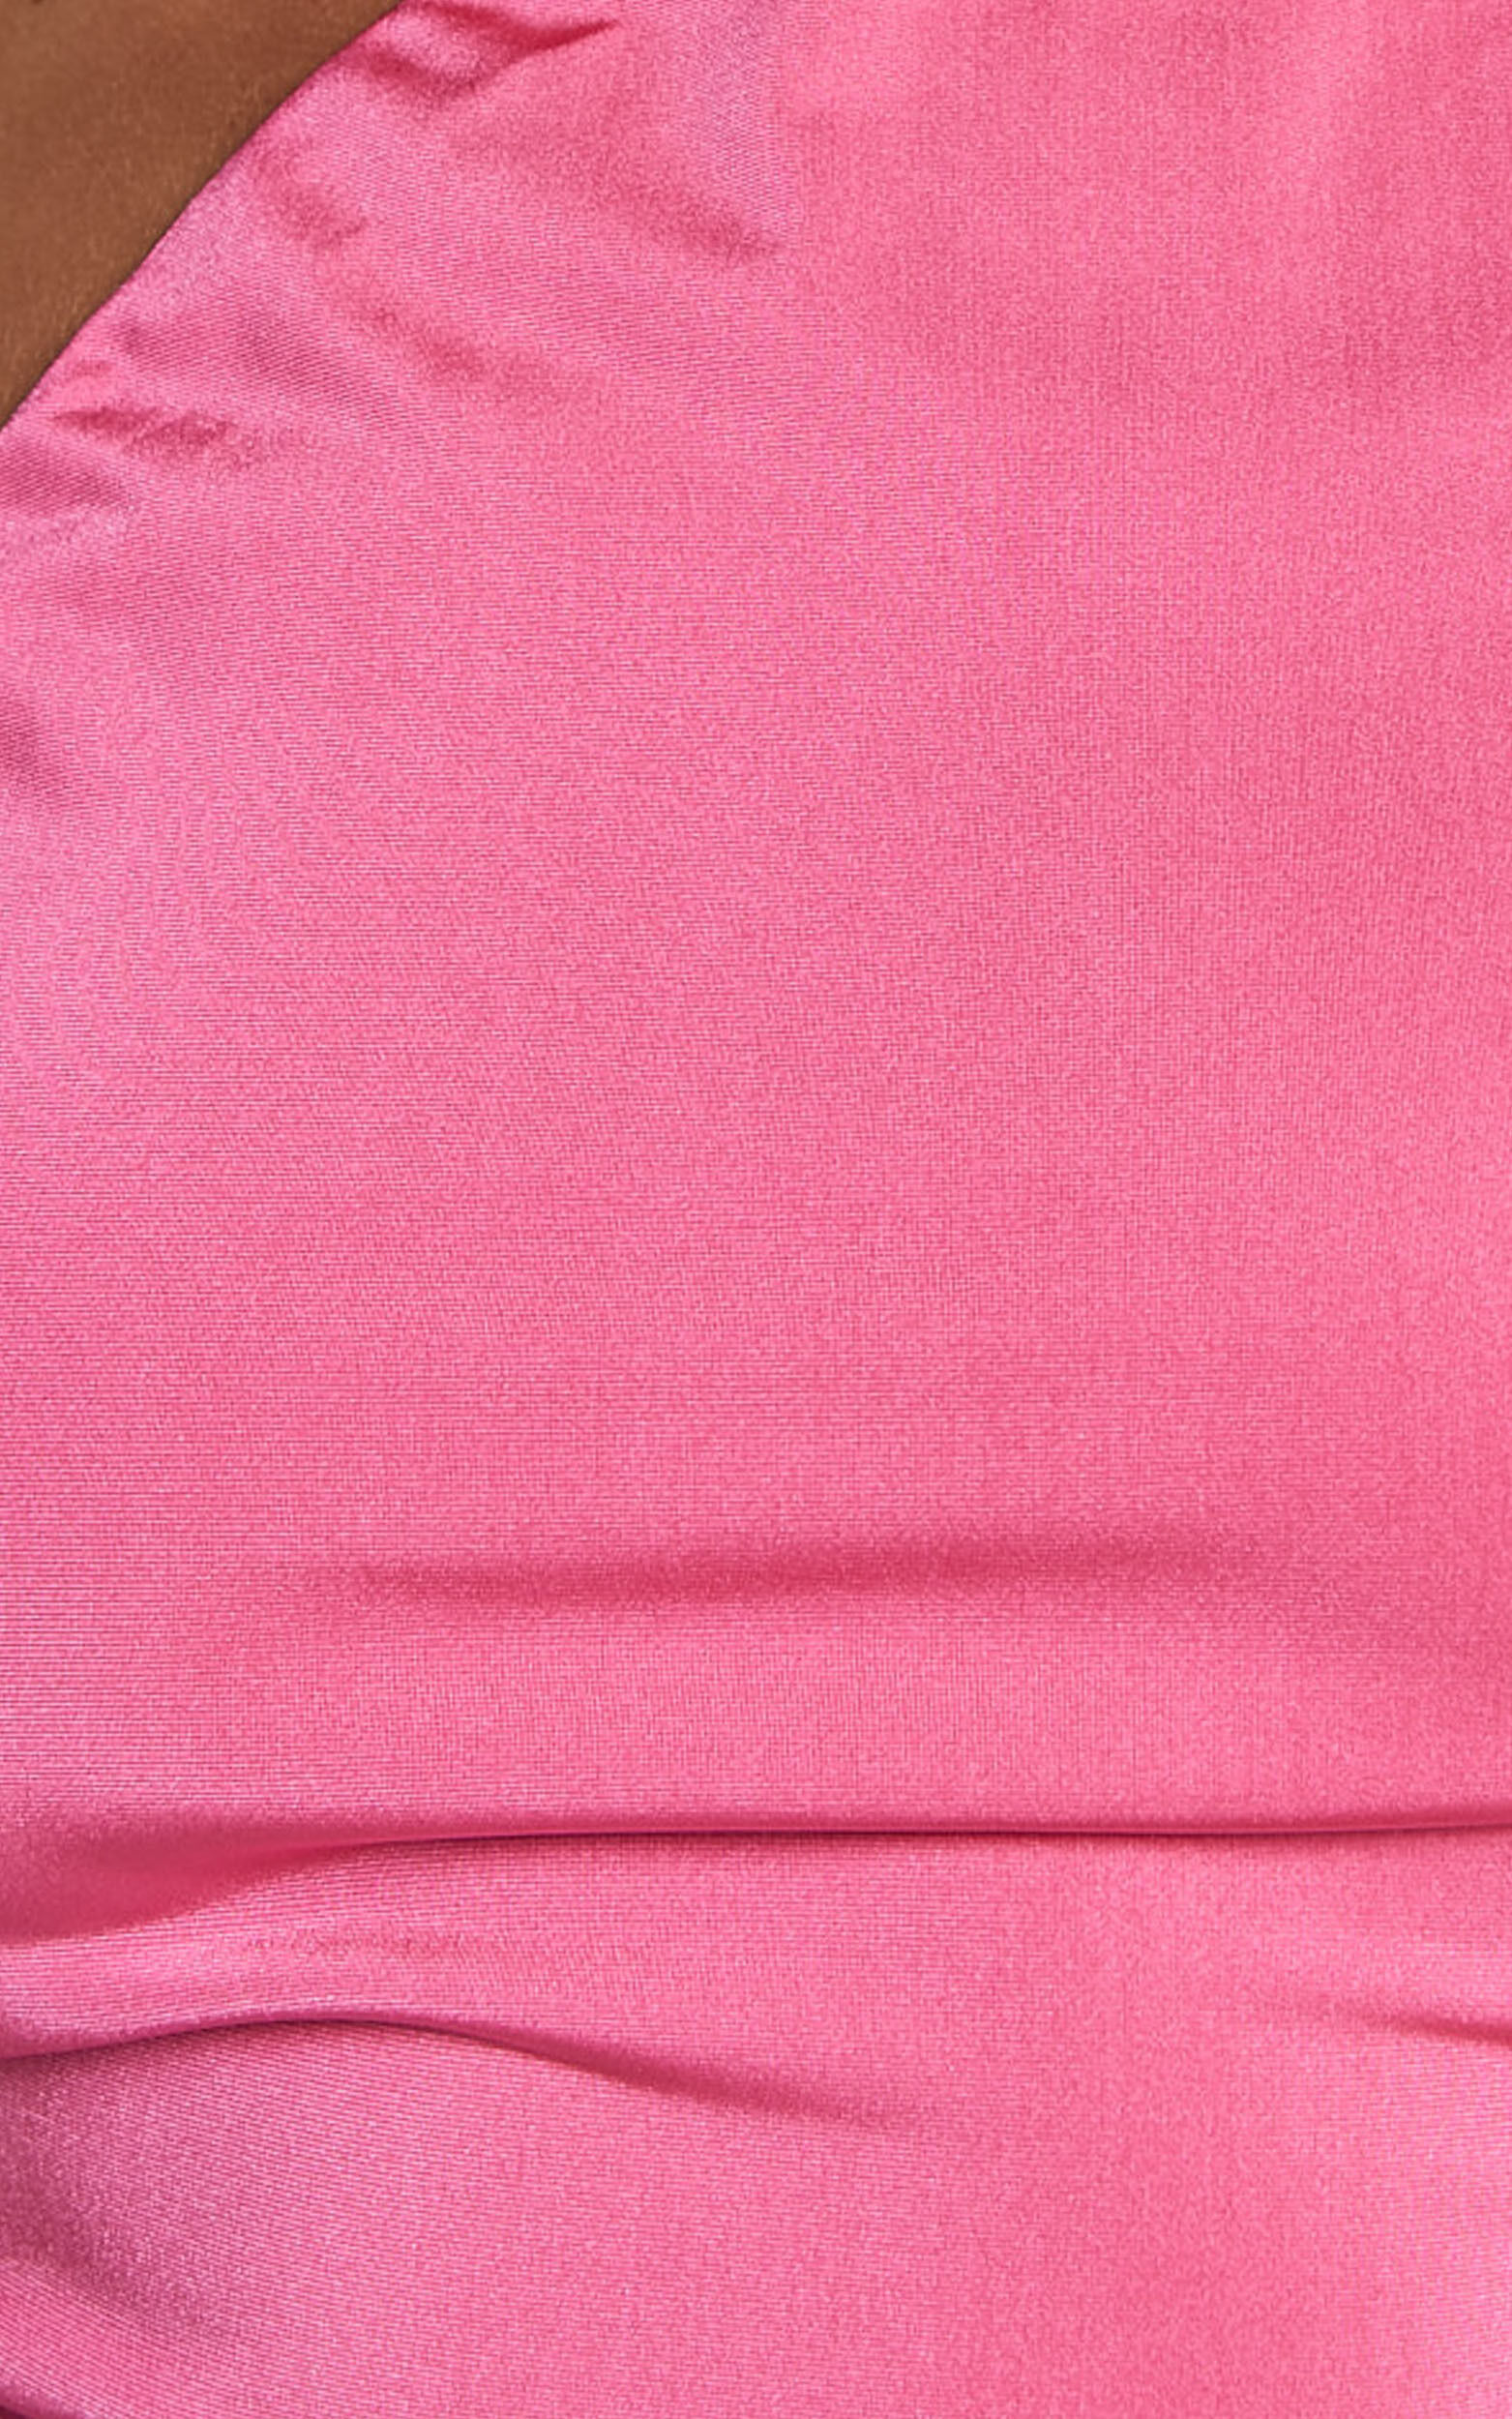 Alvera Maxi Dress - Rosette Neck Tie Detail Dress in Pink | Showpo